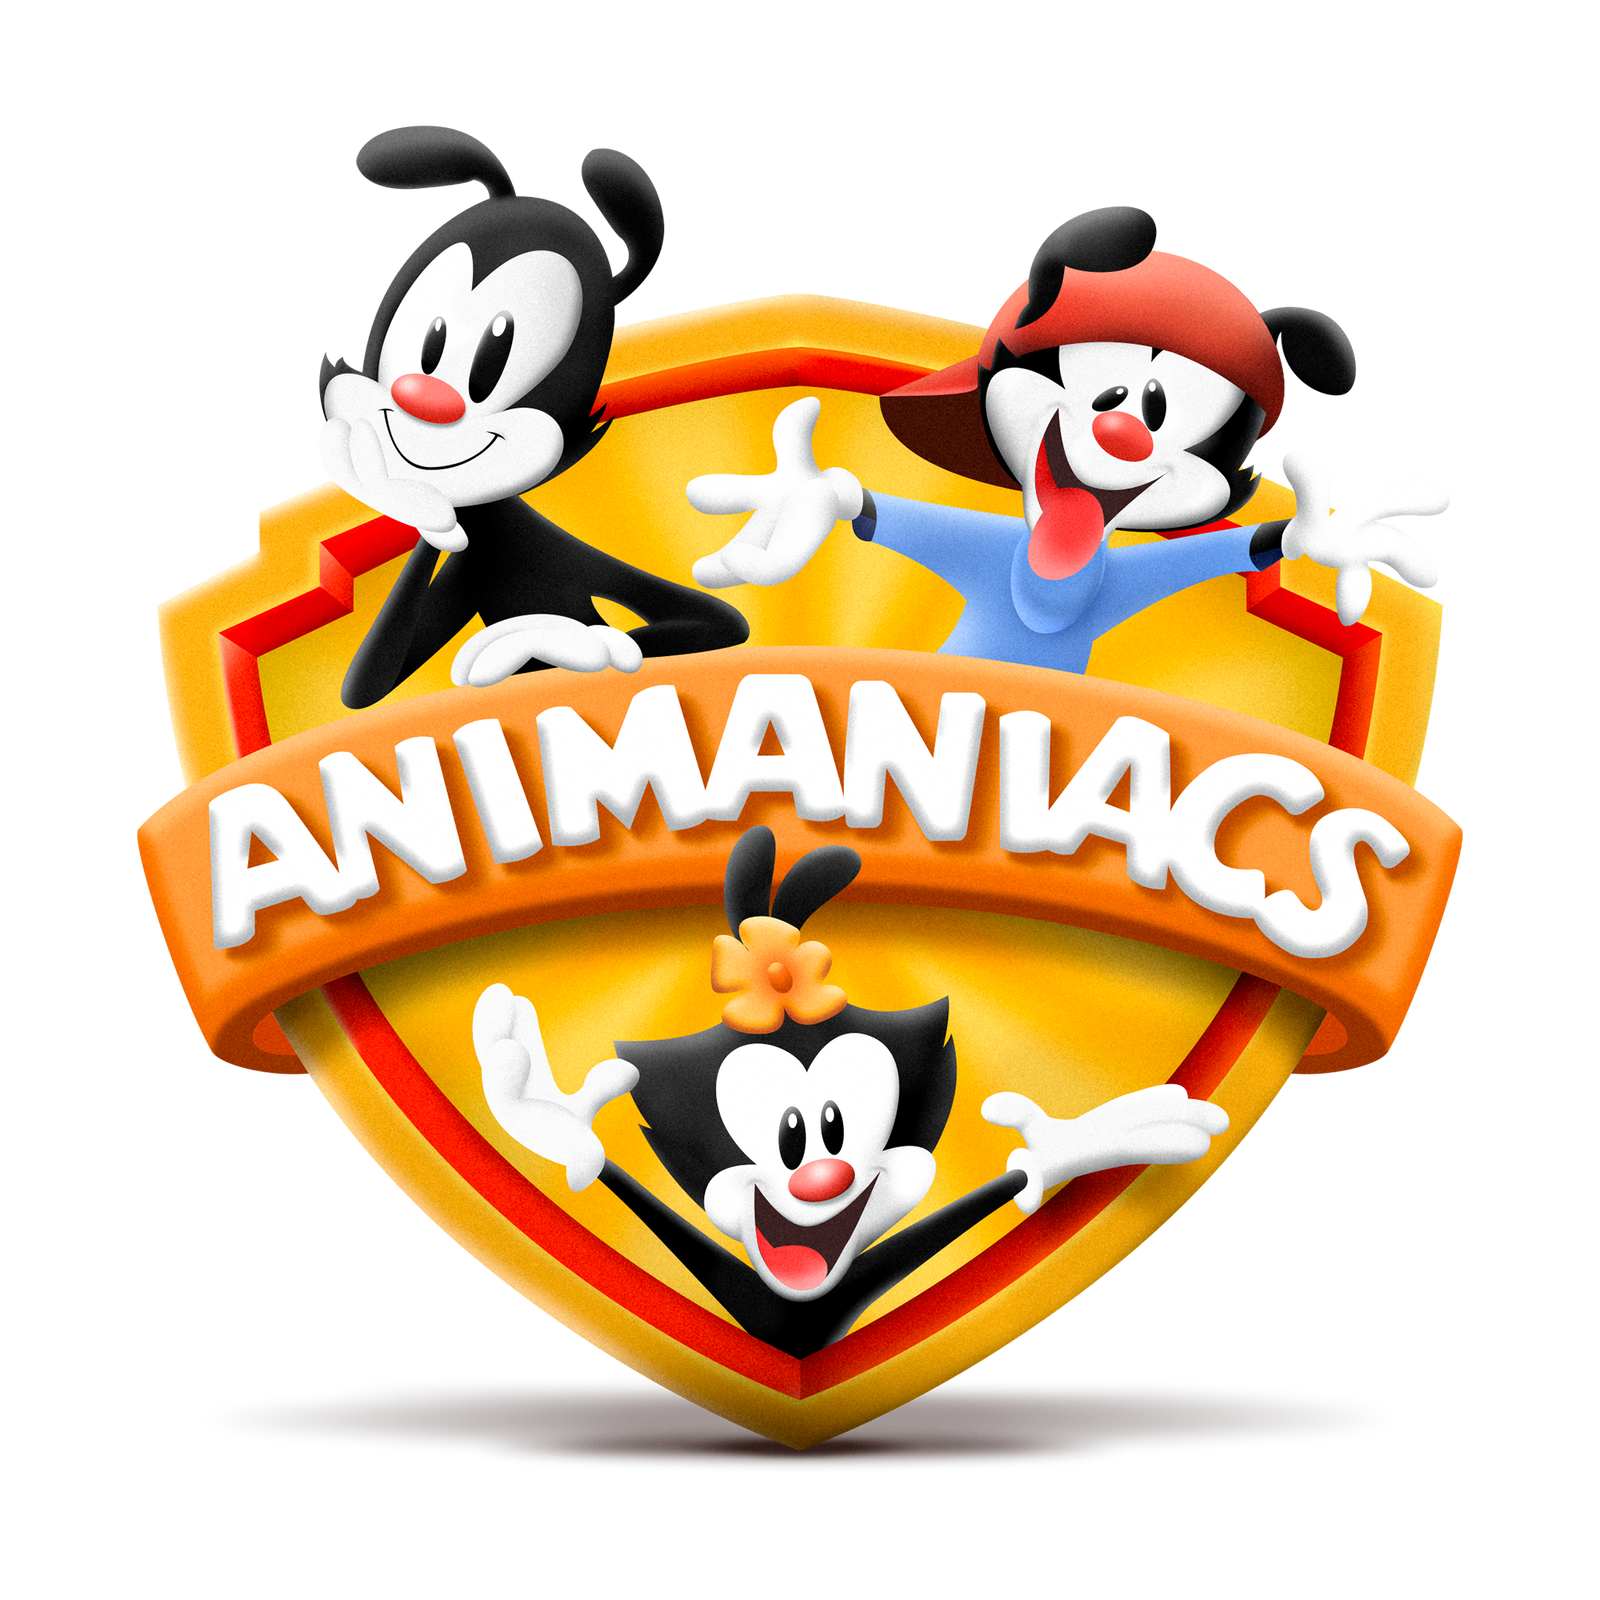 Animaniacs logo.